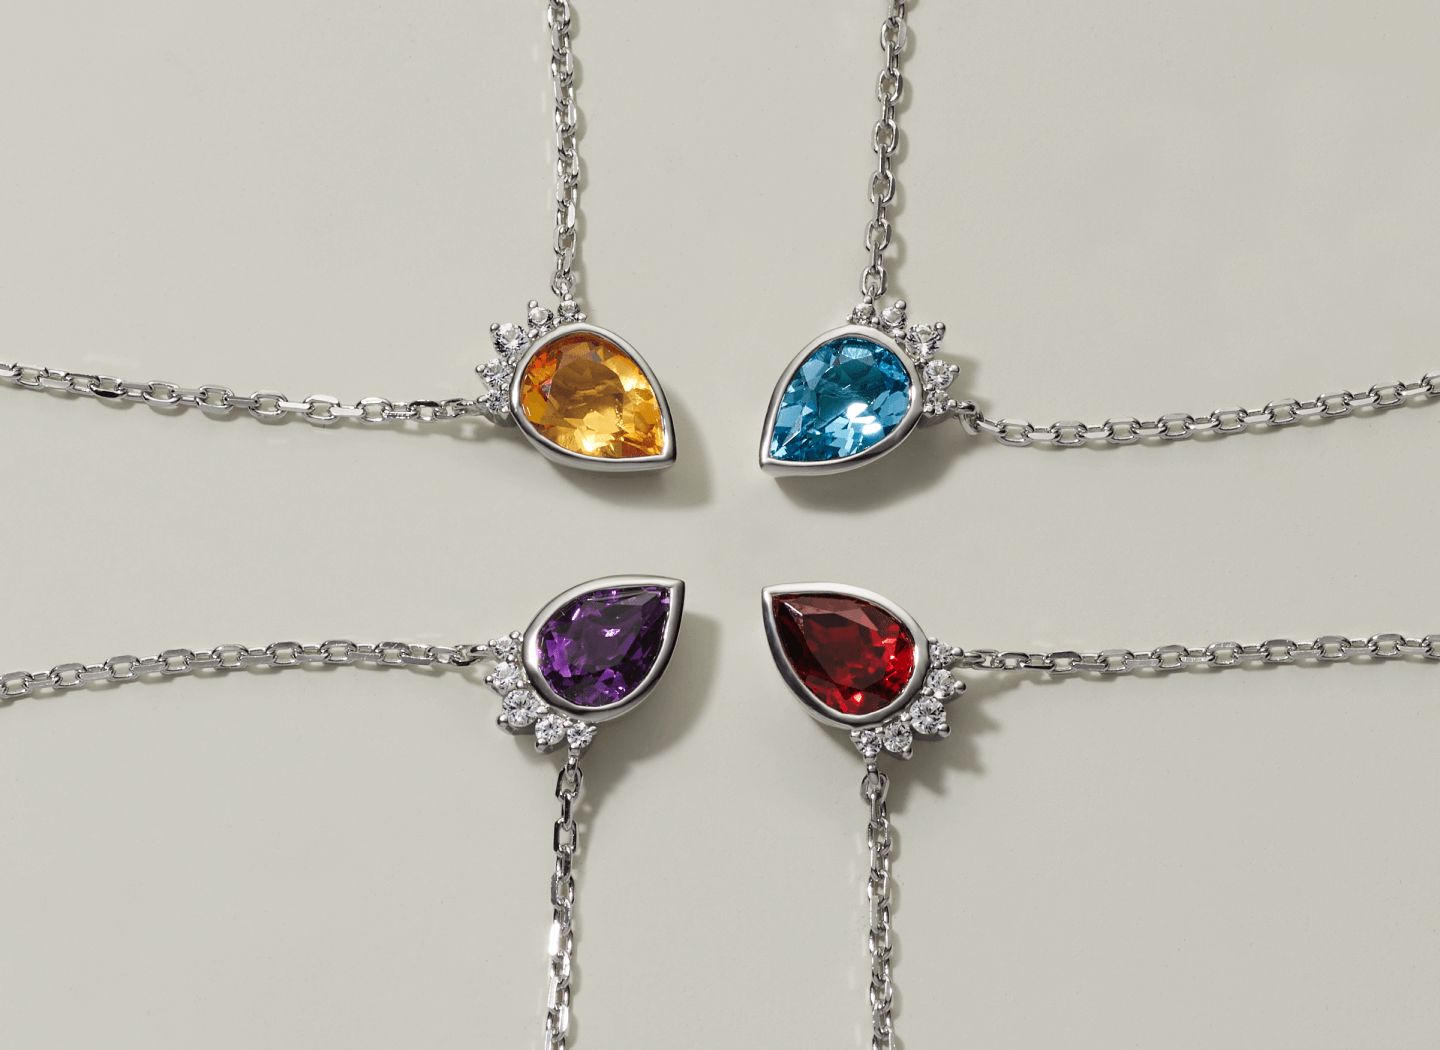 4 gemstone pendants of different colors